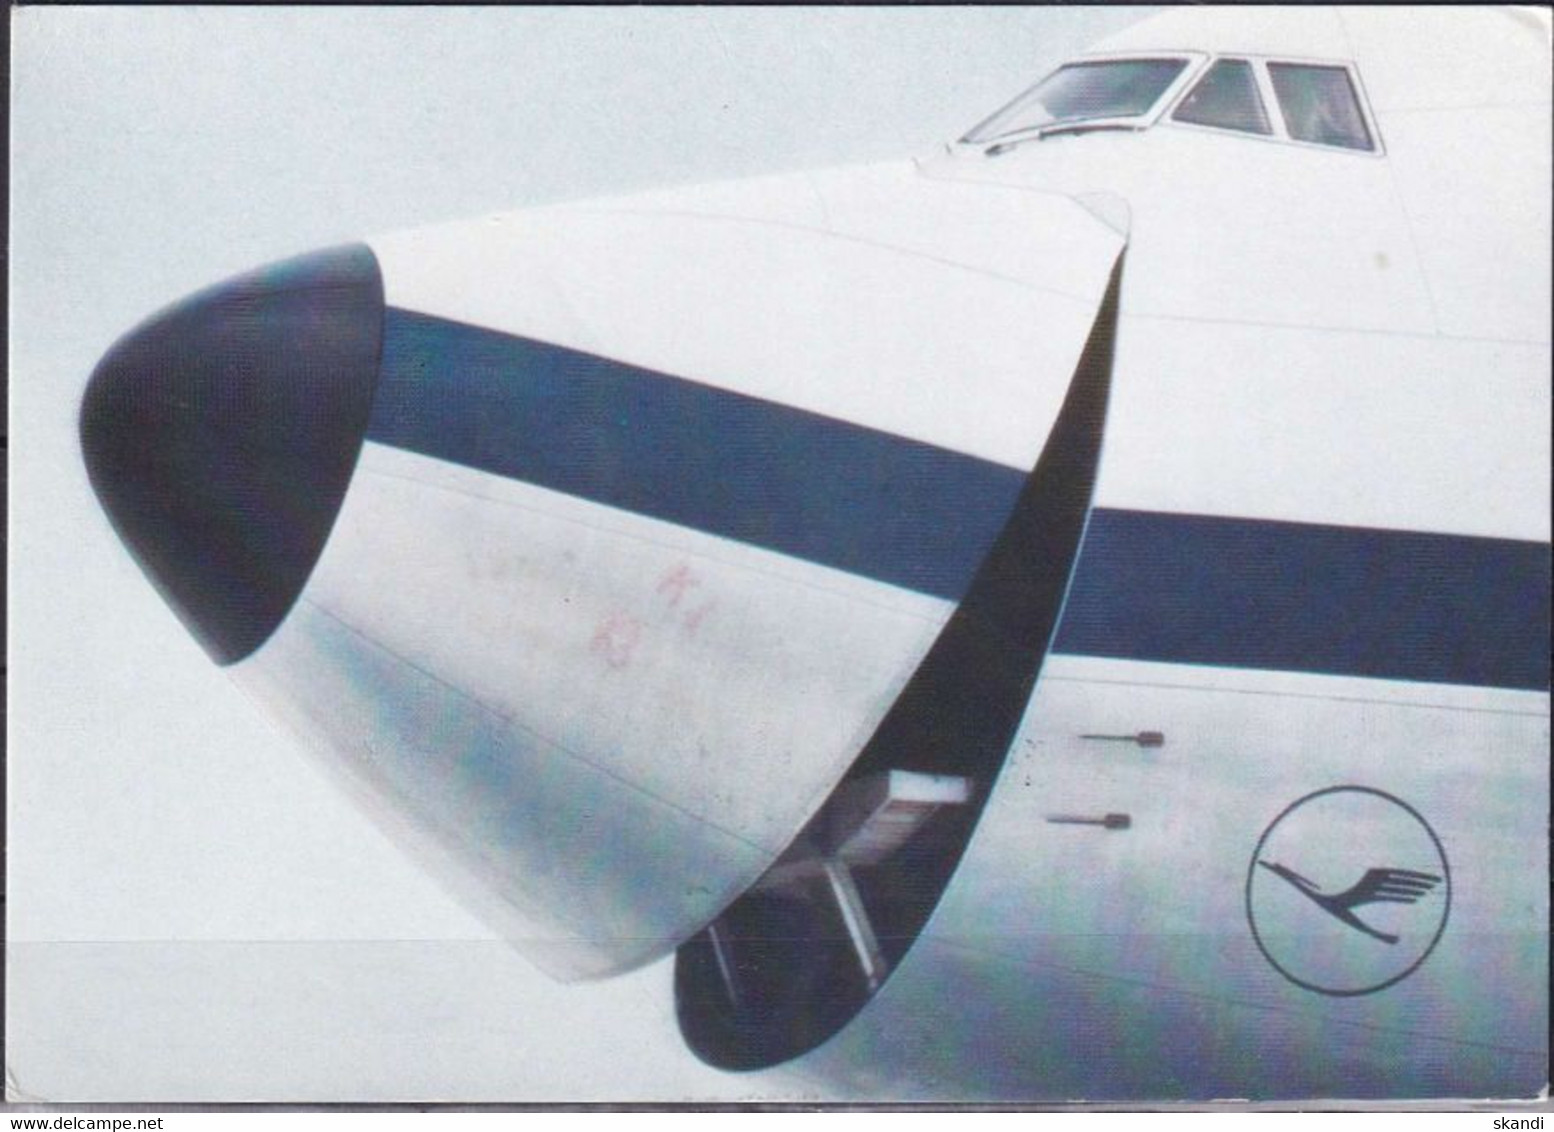 UNO NEW YORK 1991 Postkarte Milanophil'91 Lufthansa - Lettres & Documents